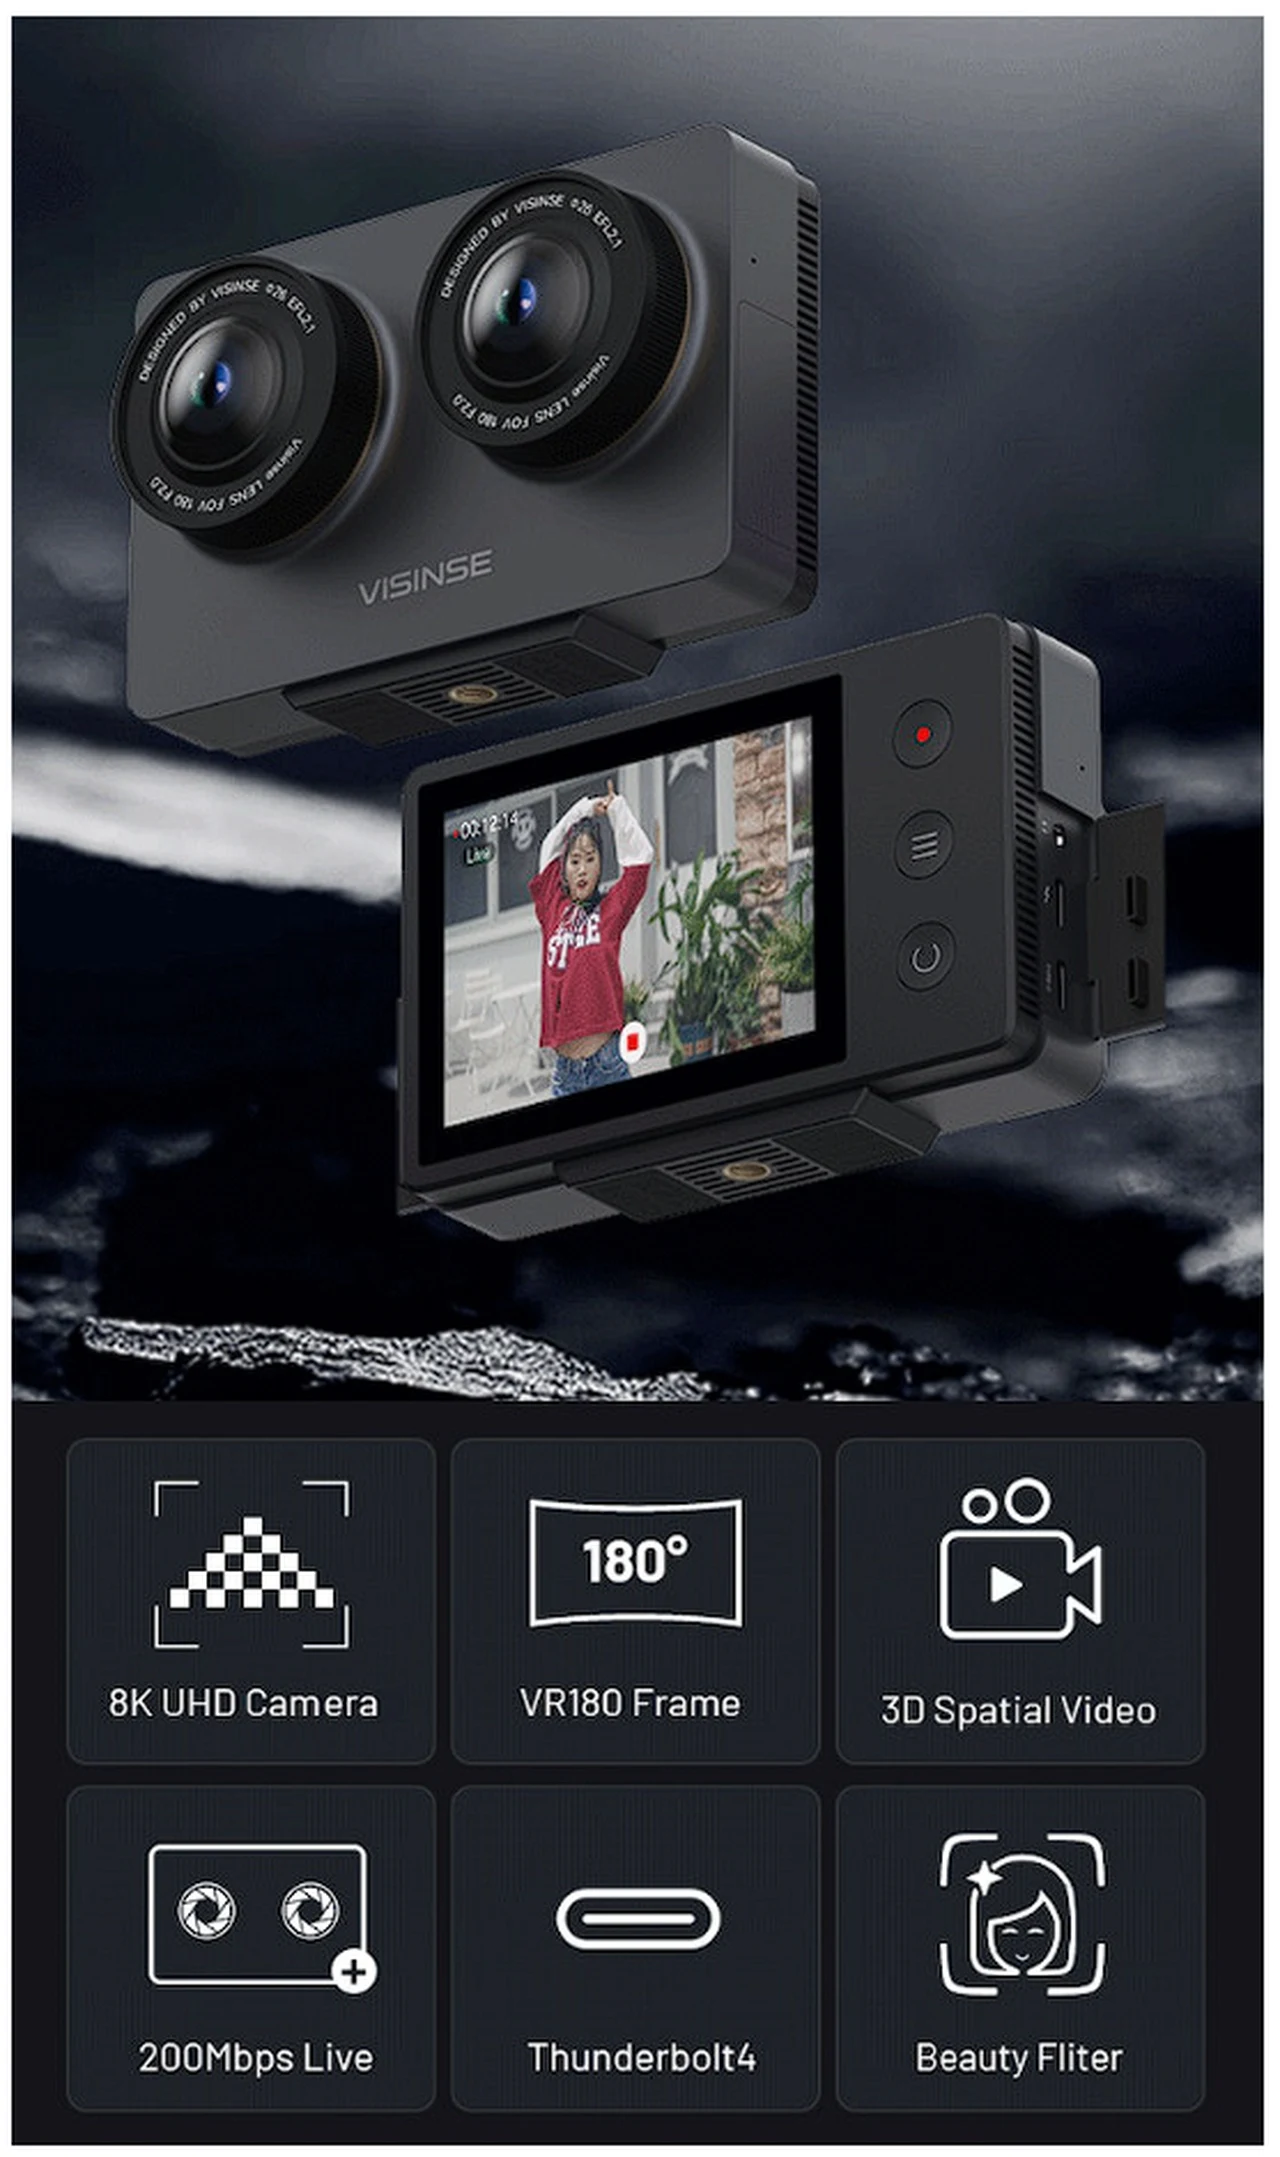 Tarsier 3d camera features